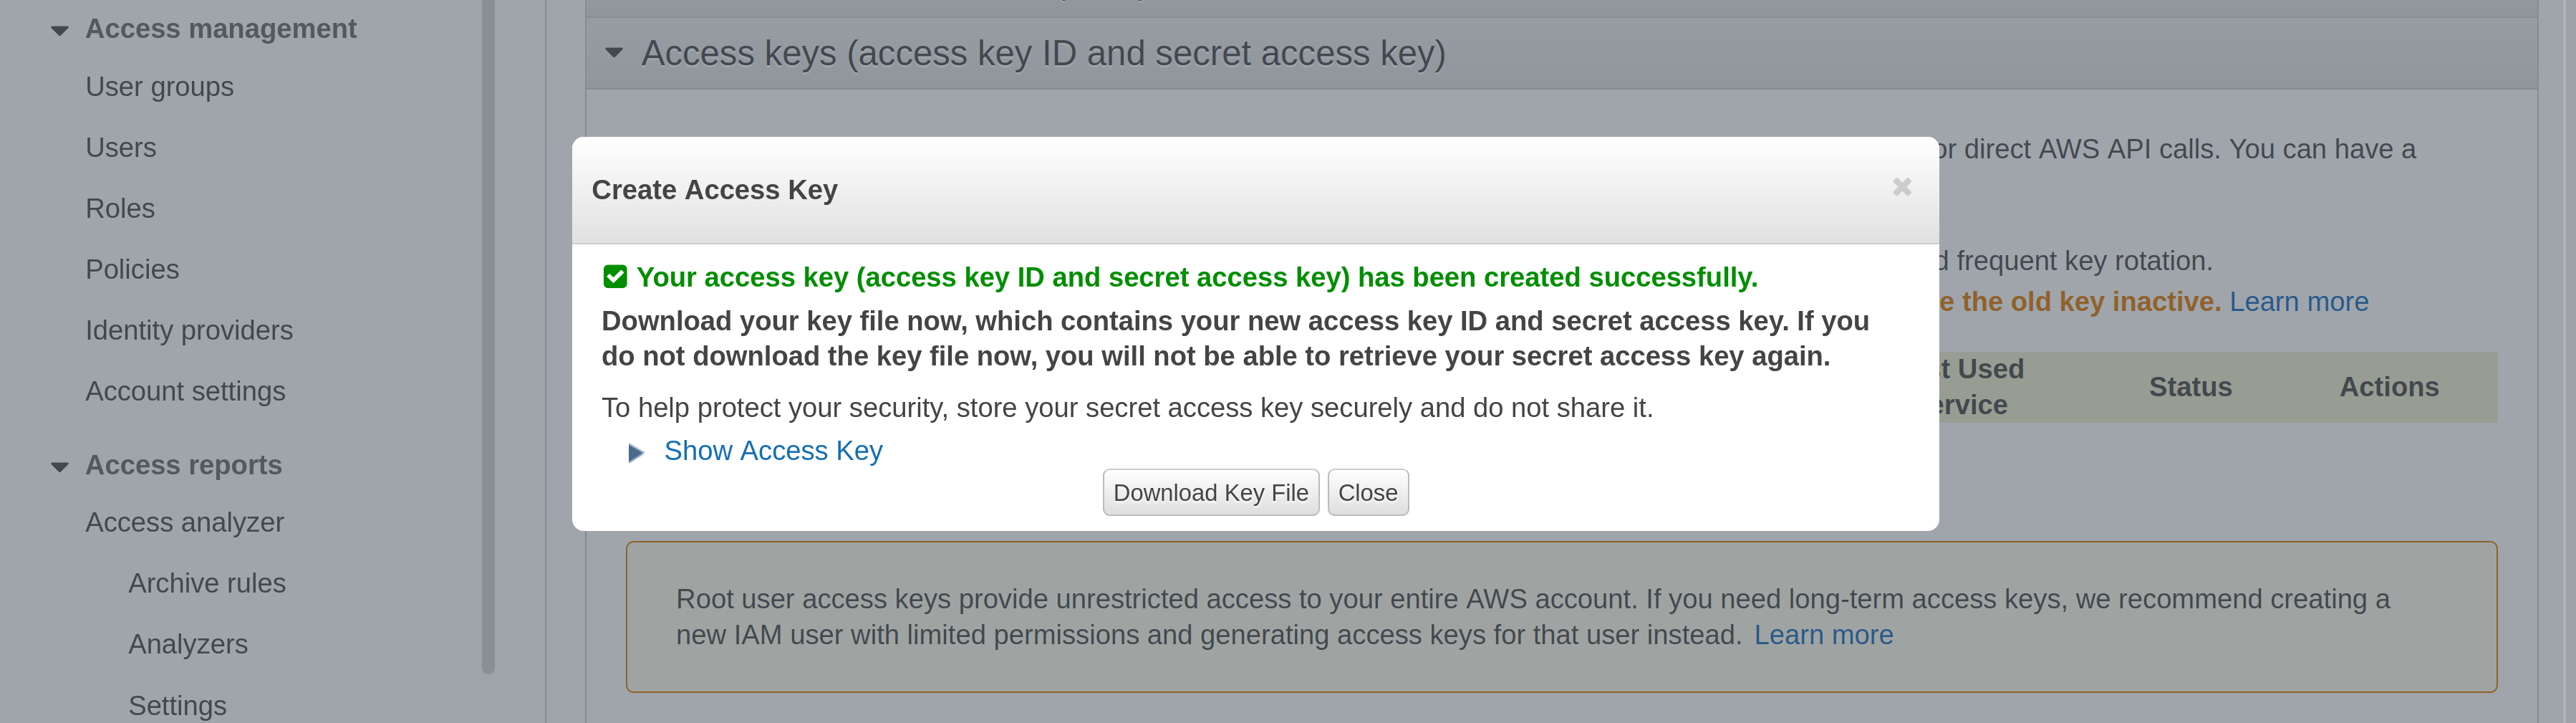 Choose access keys